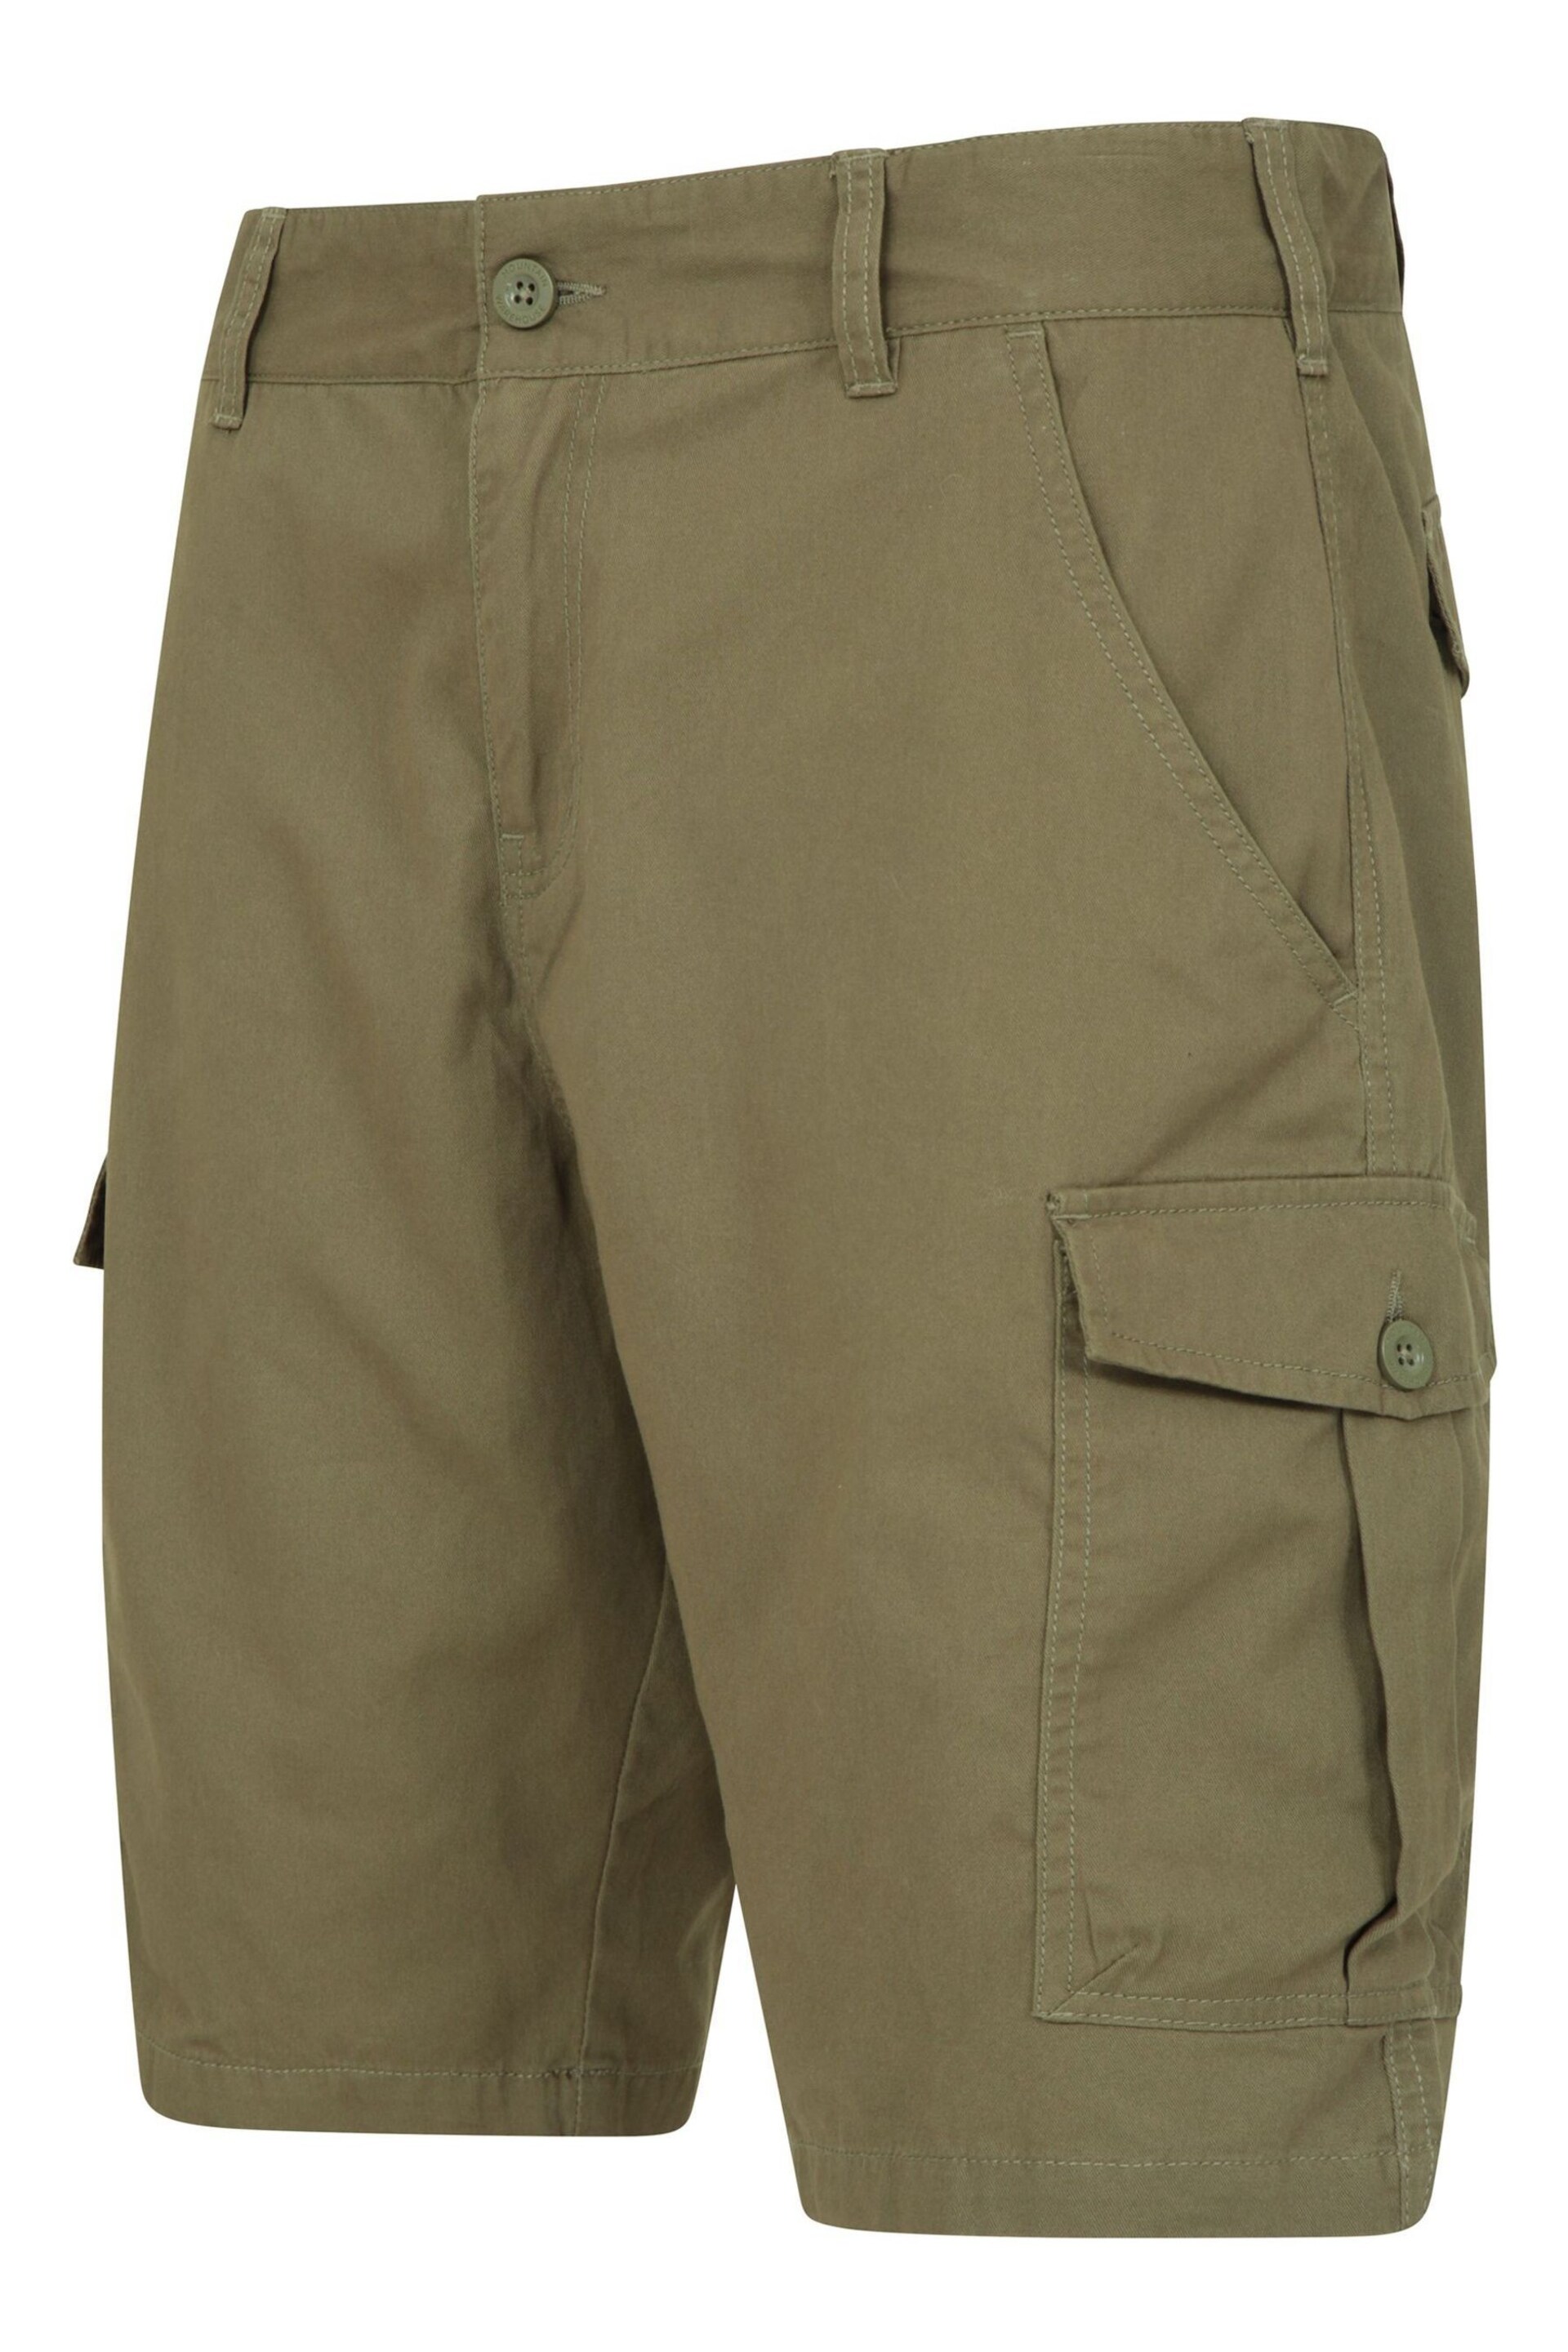 Mountain Warehouse Khaki Green Lakeside Mens Cargo Shorts - Image 3 of 5